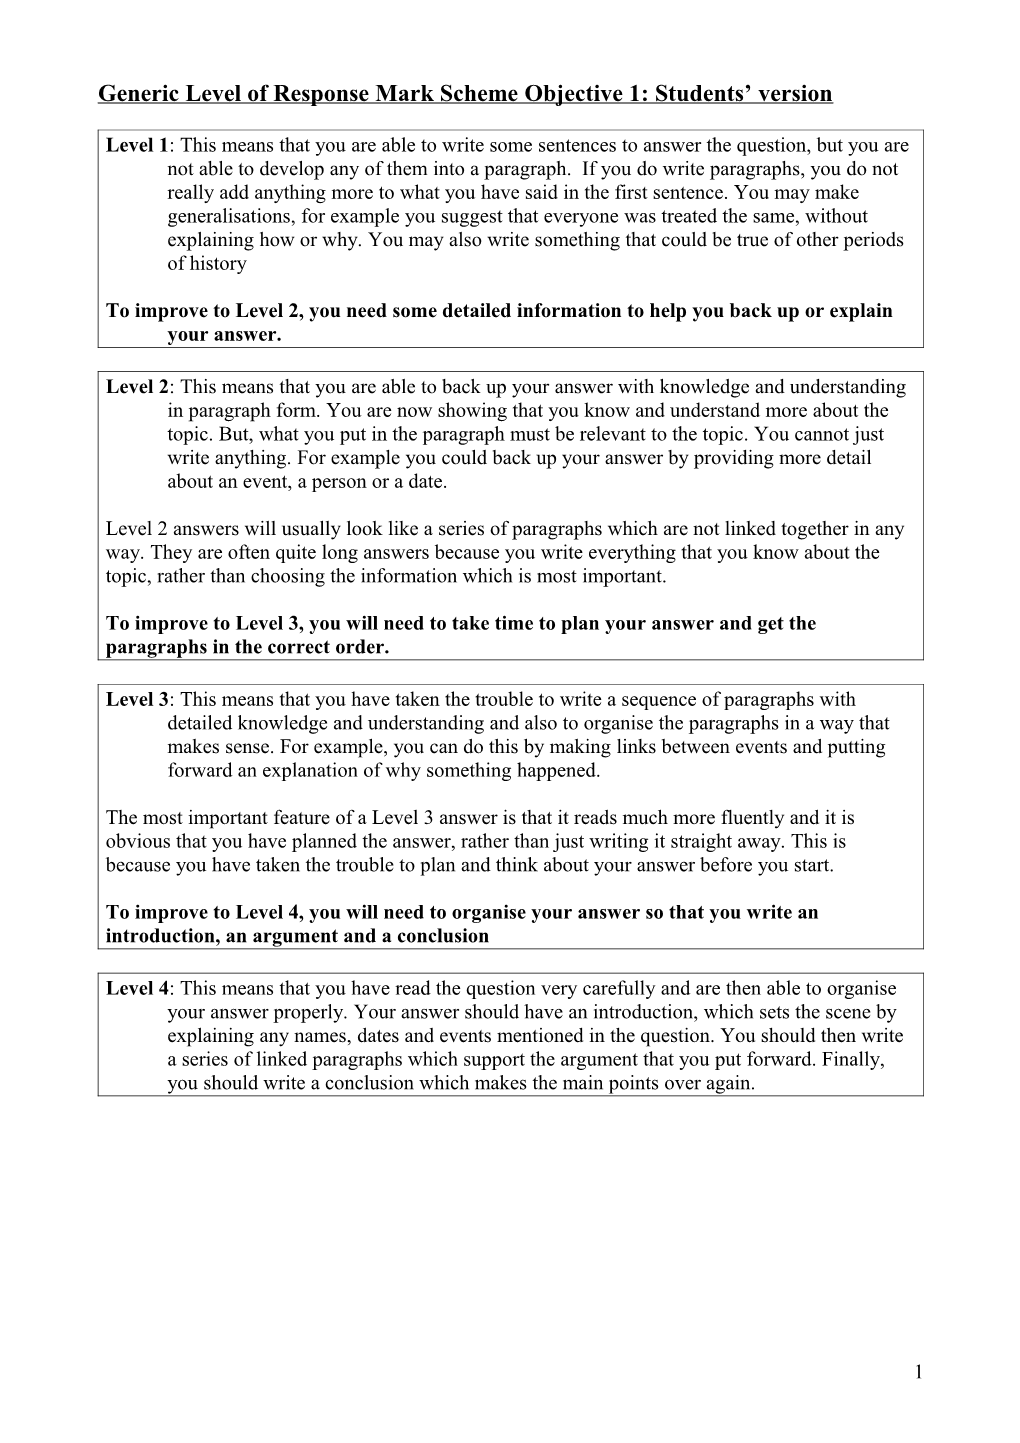 Generic Level of Response Mark Scheme Paper 1: Students Version